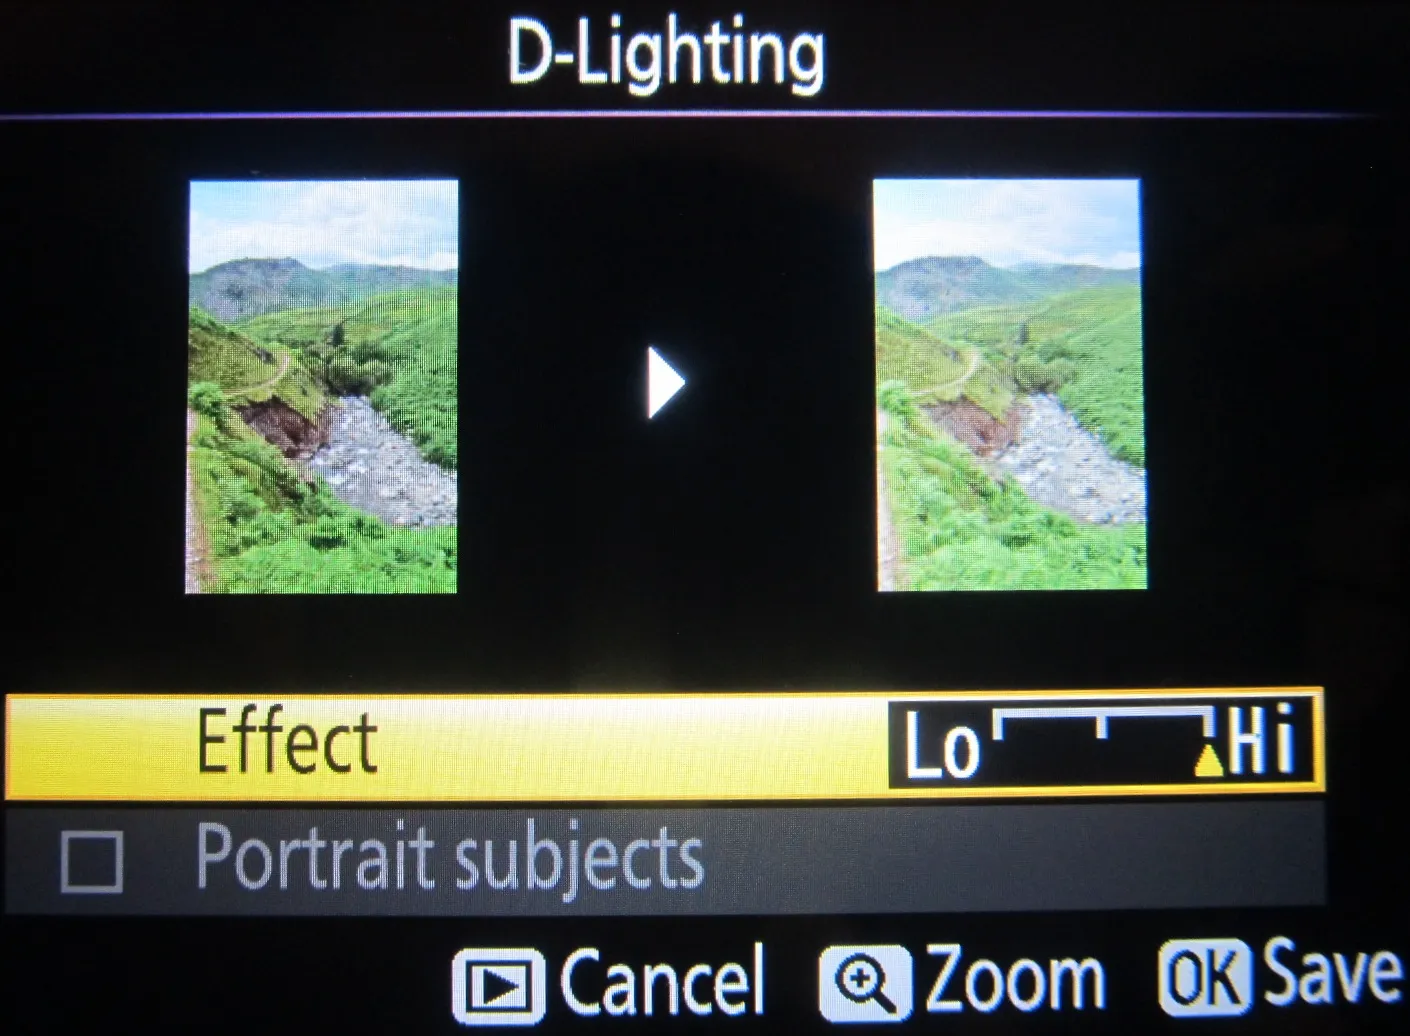 Nikon D5300 D-lightning options